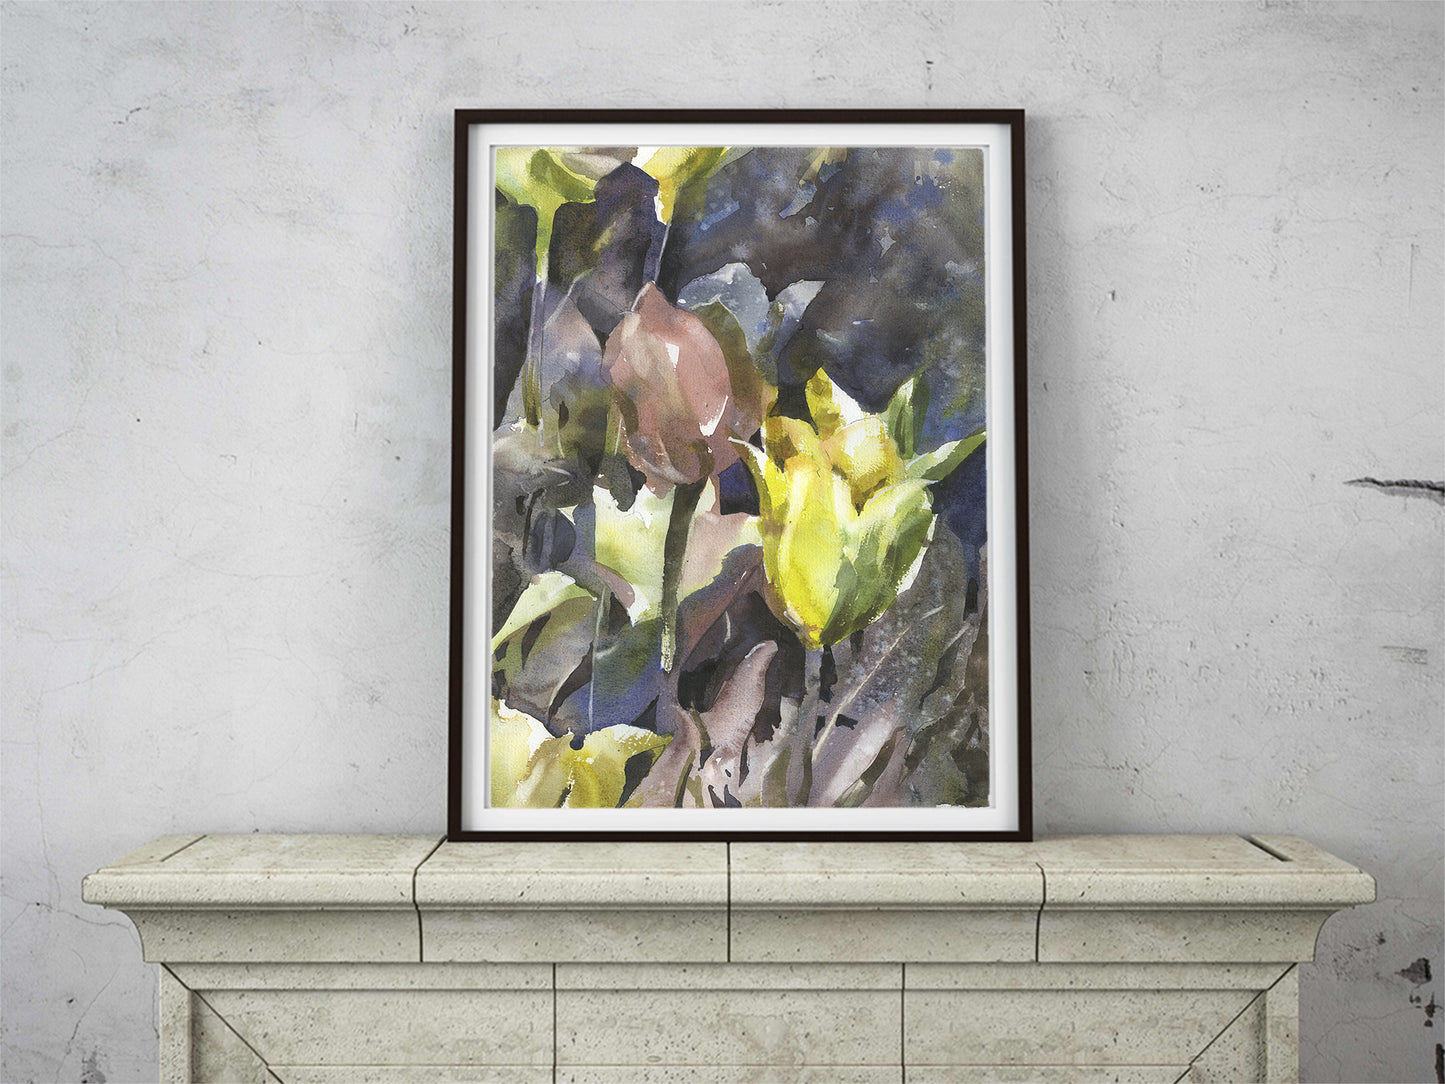 Tulip watercolor painting.  Floral artwork colorful tulip bulbs home interior artwork fine art flowers (print)